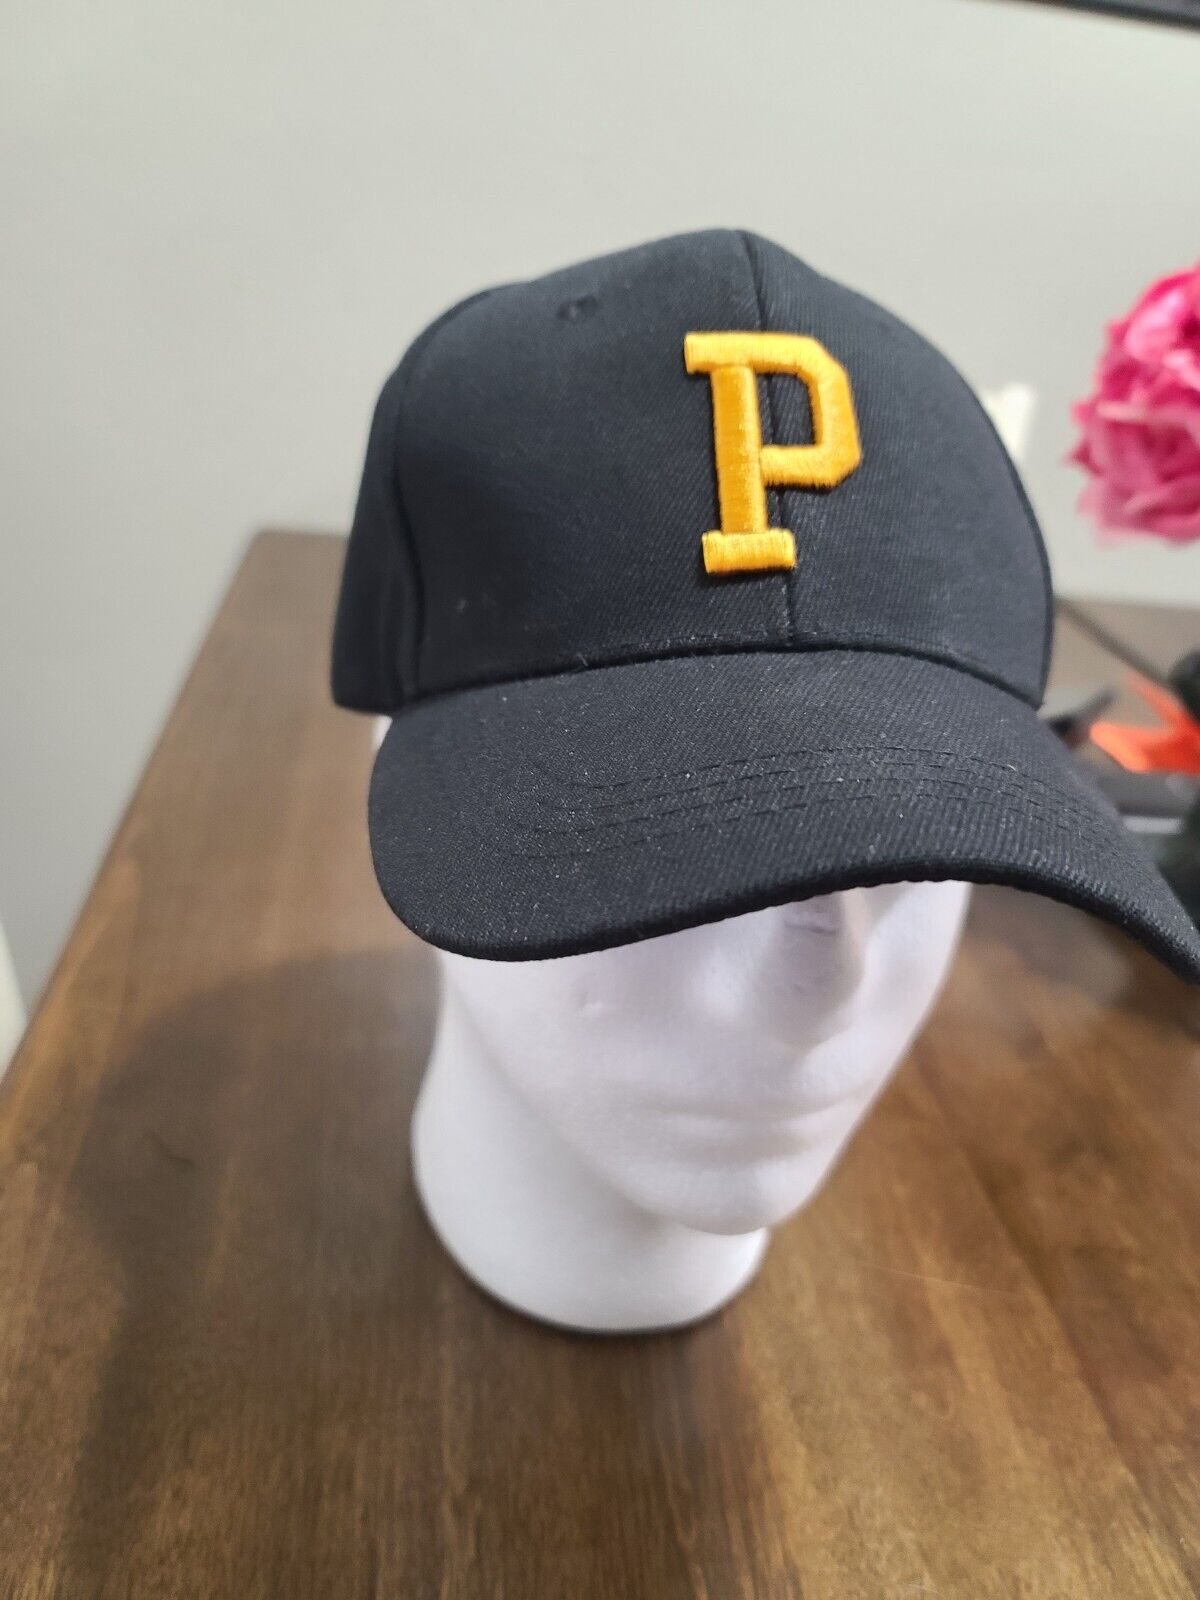 Pittsburgh Pirates Baseball cap.